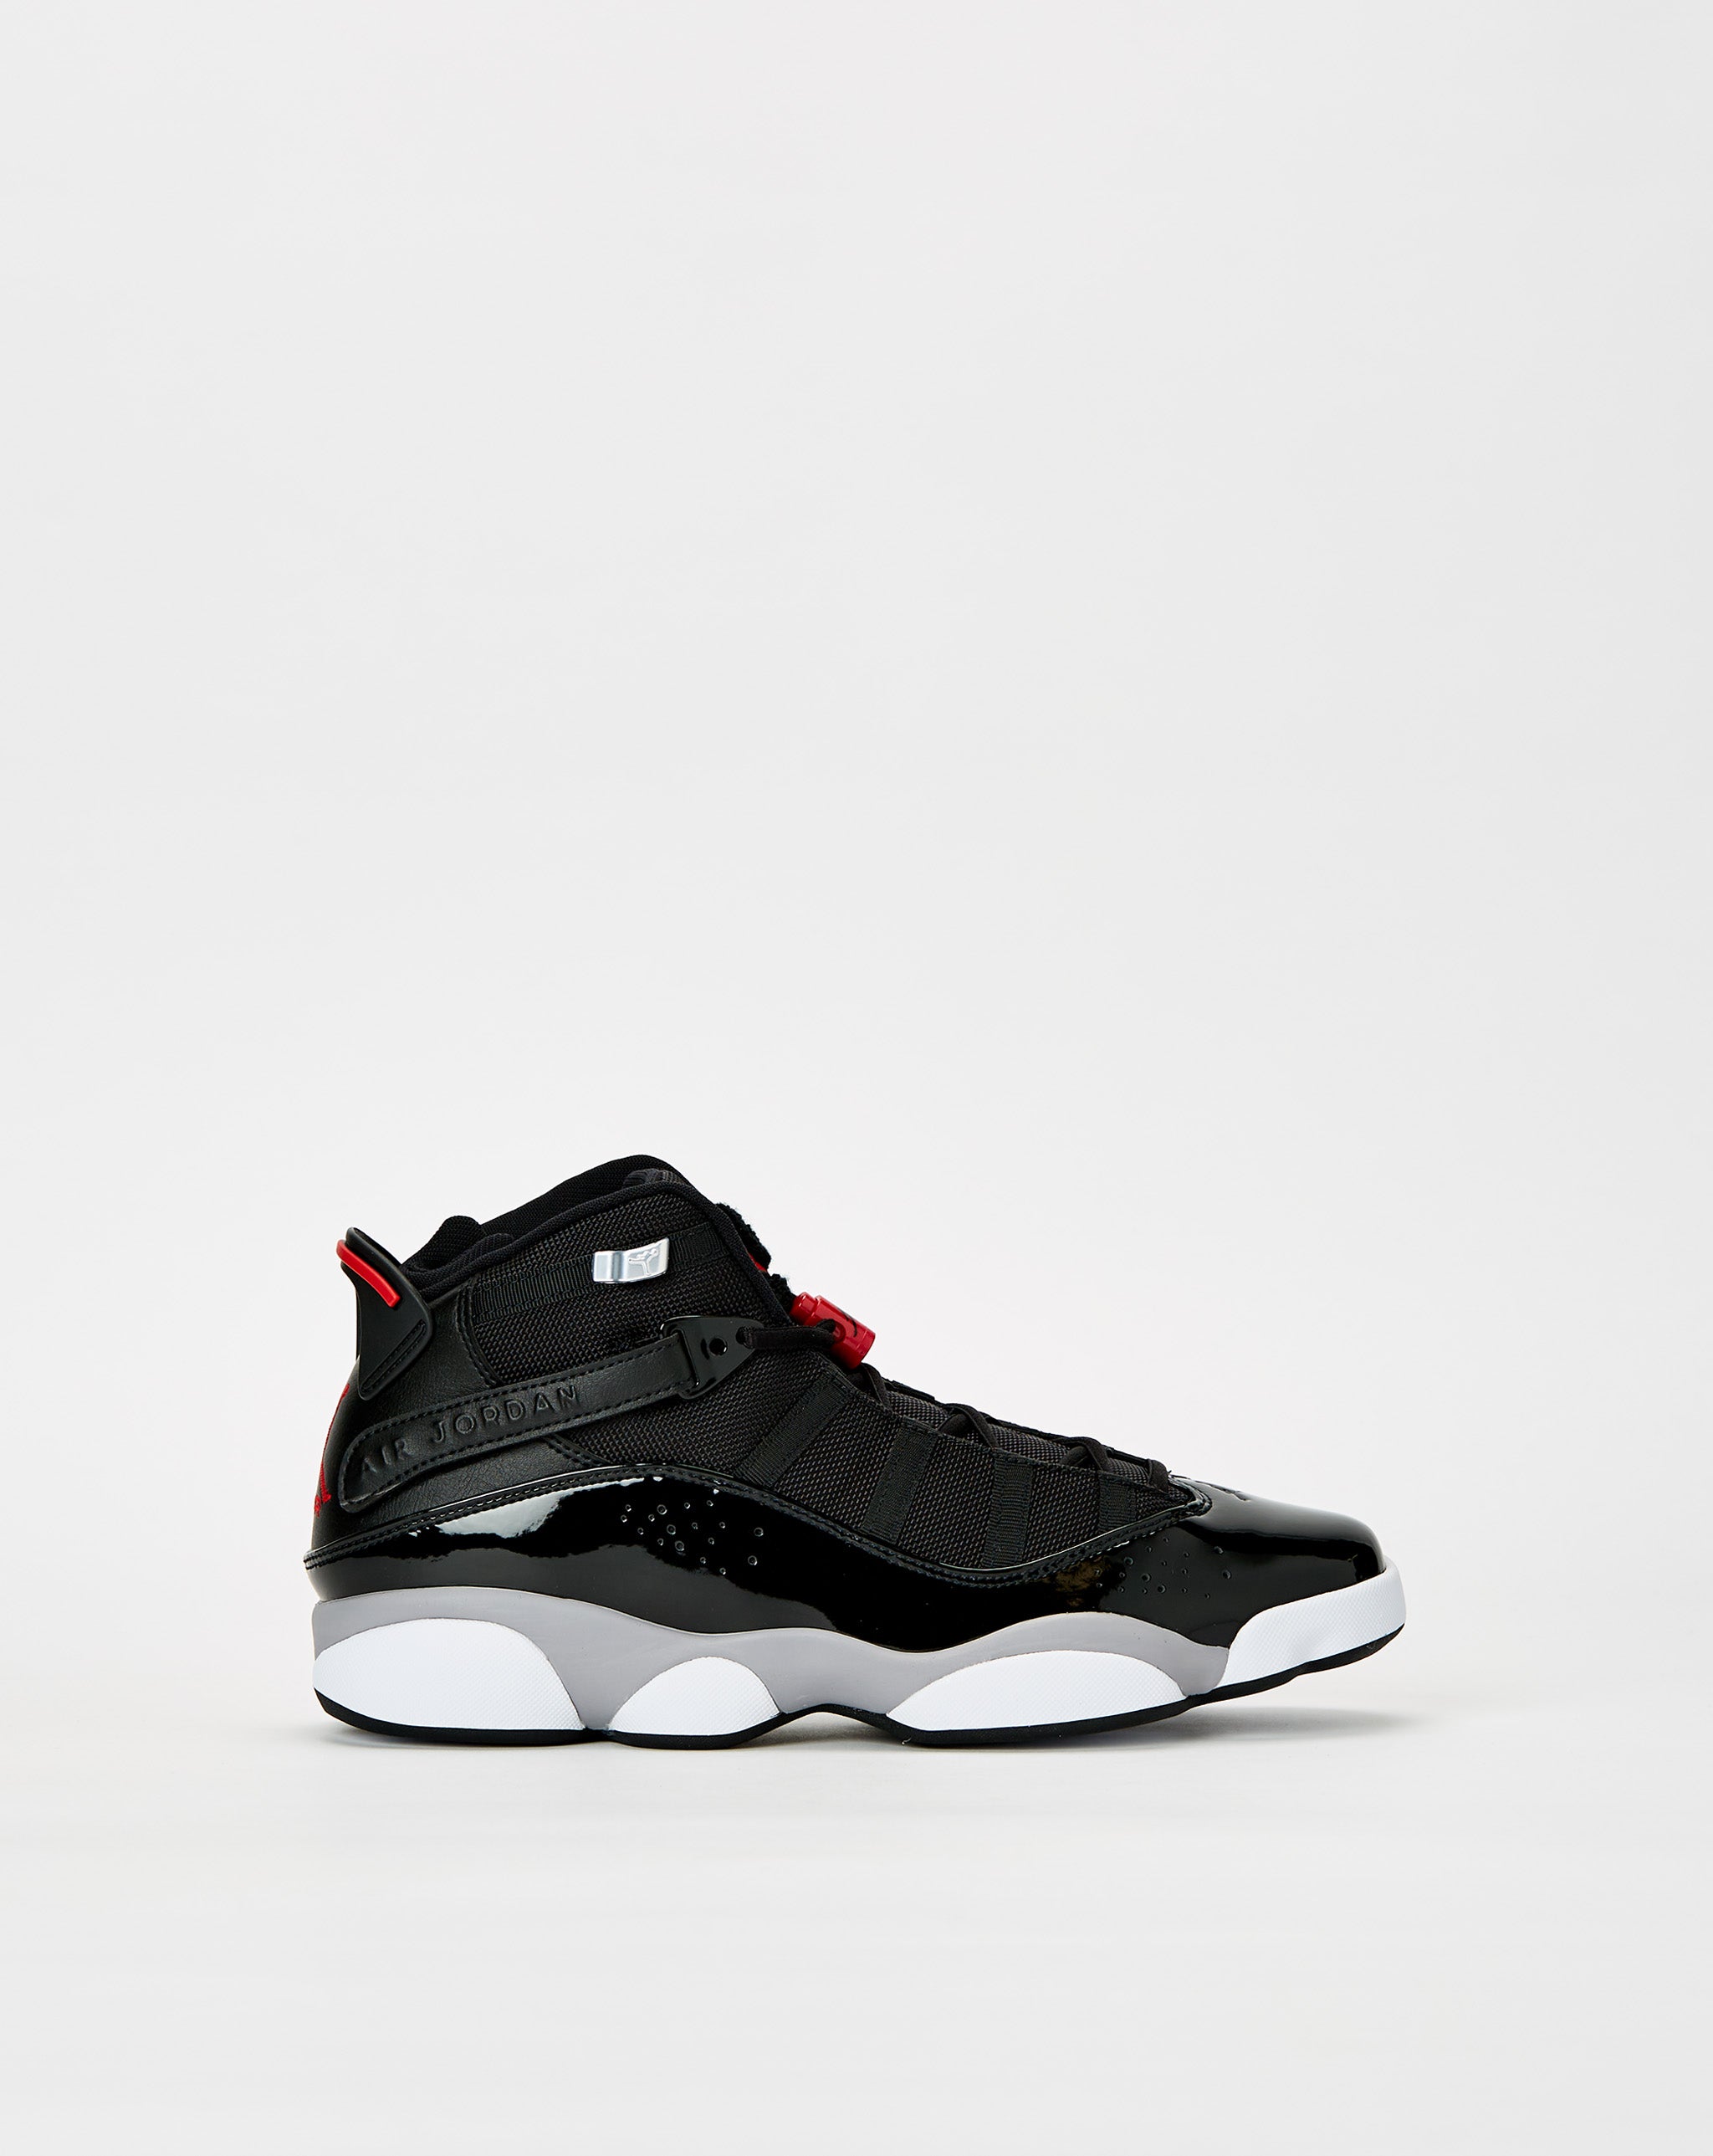 Air Jordan nike jordan adidas reebok ted yeezy sneakers release  - Cheap Erlebniswelt-fliegenfischen Jordan outlet